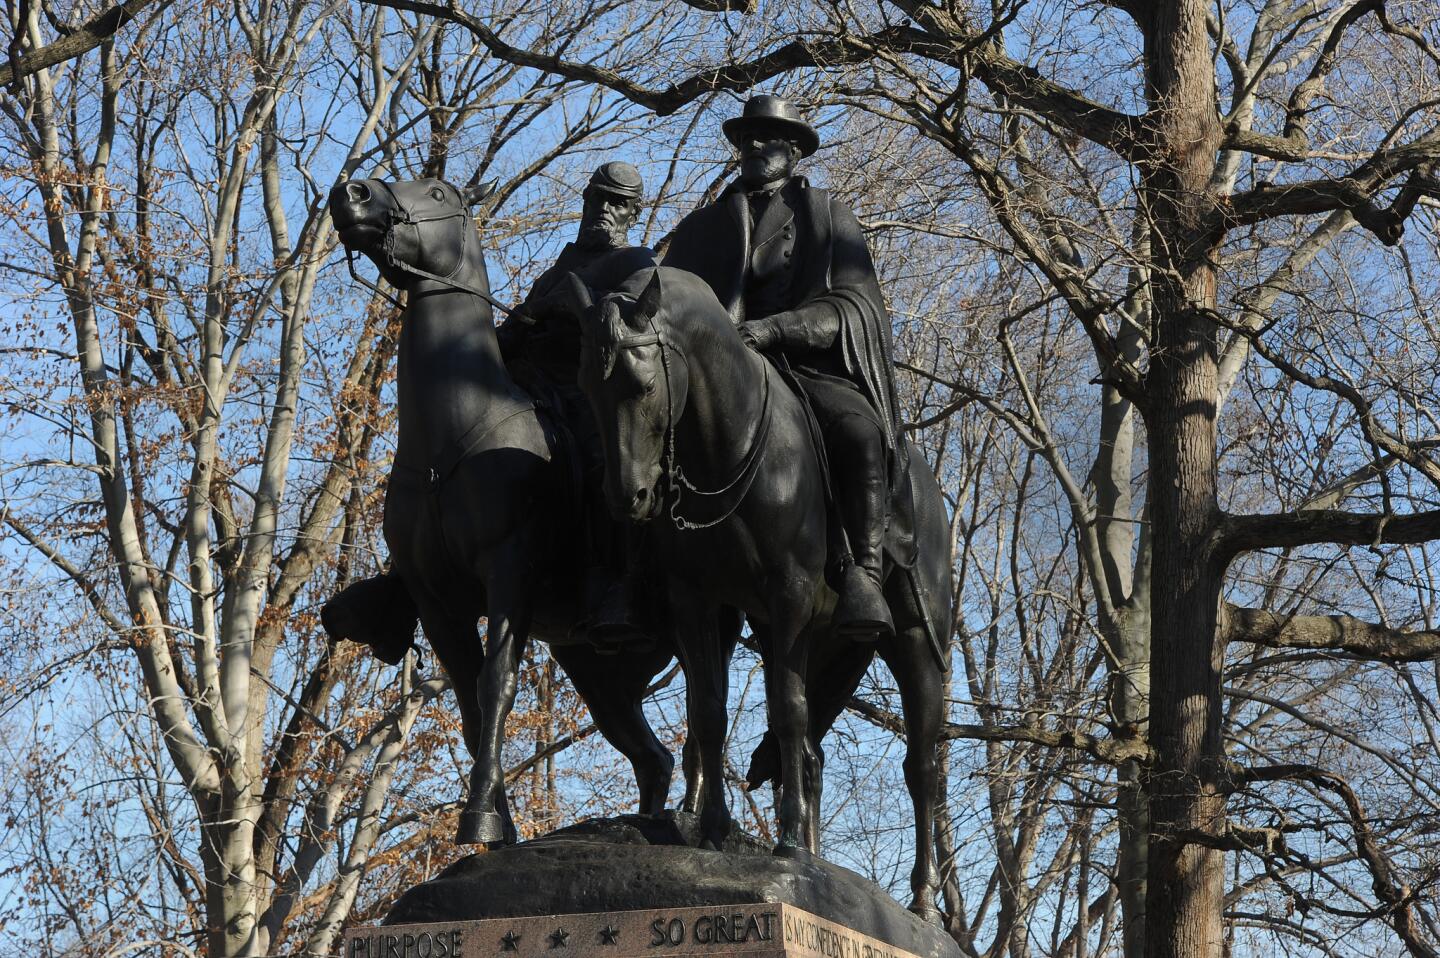 Robert E. Lee and "Stonewall" Jackson monument